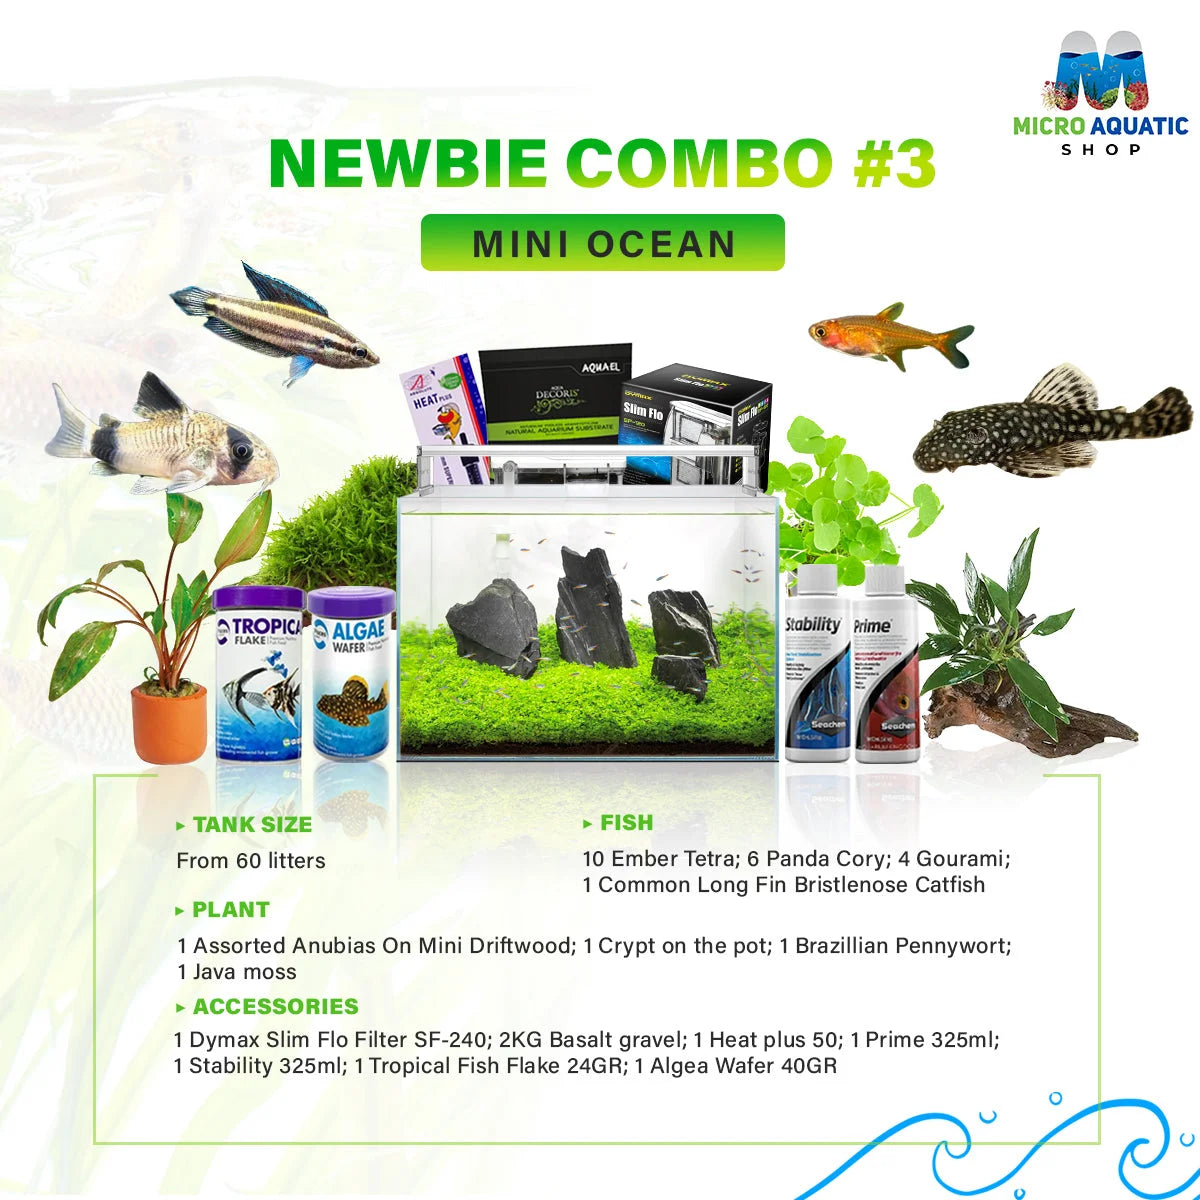 MINI OCEAN COMBO: FOR NEWBIE FISH & PLANT LOVER